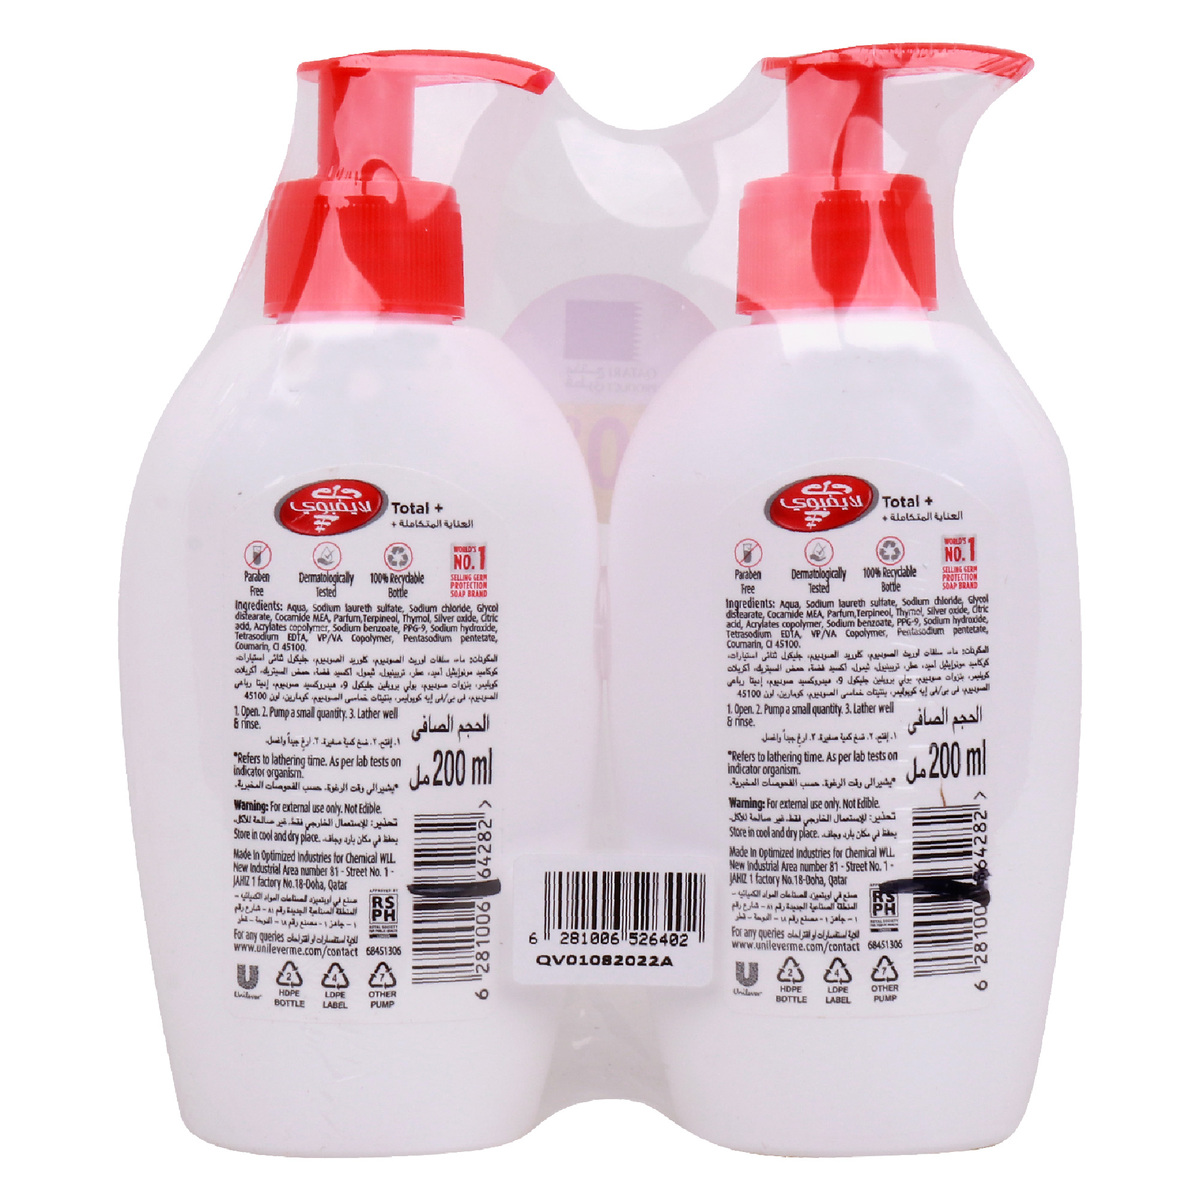 Lifebuoy Total Activ Silver Formula Germ Protection Handwash Value Pack 2 x 200 ml